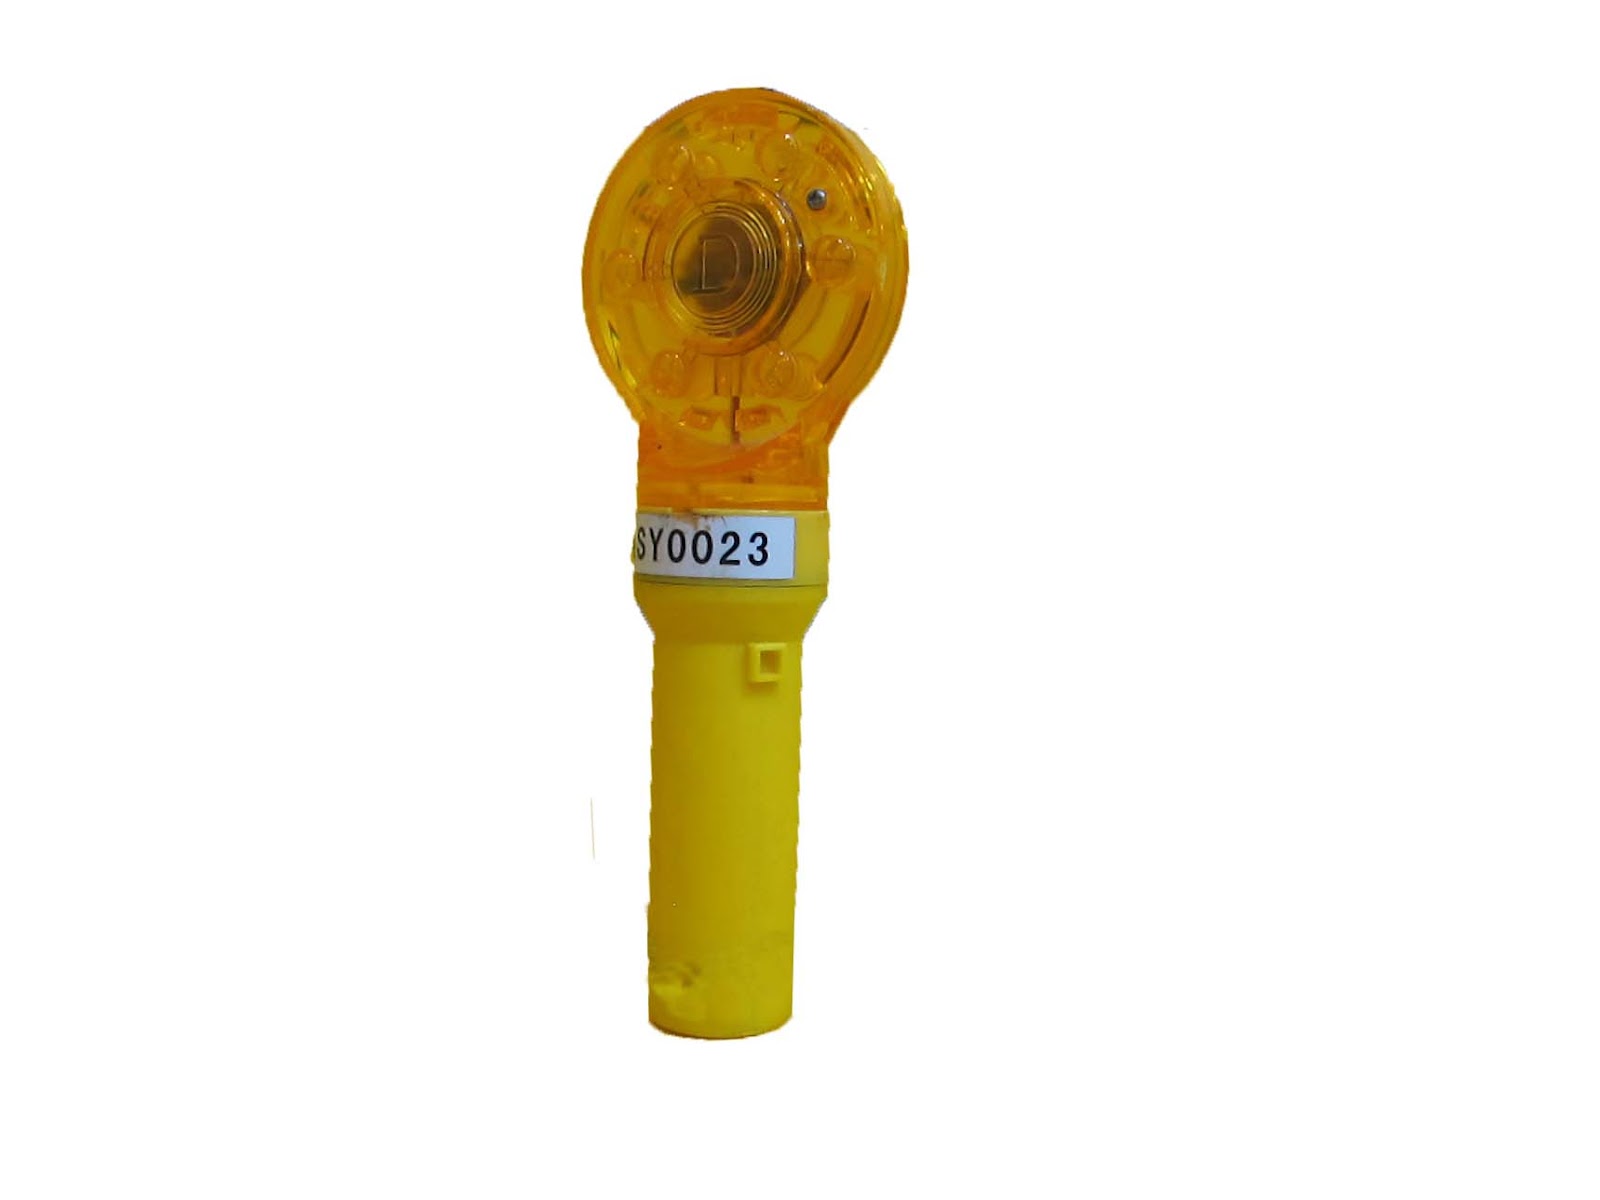  ASY0023 Flashing Light Amber - Yellow Flashing Light